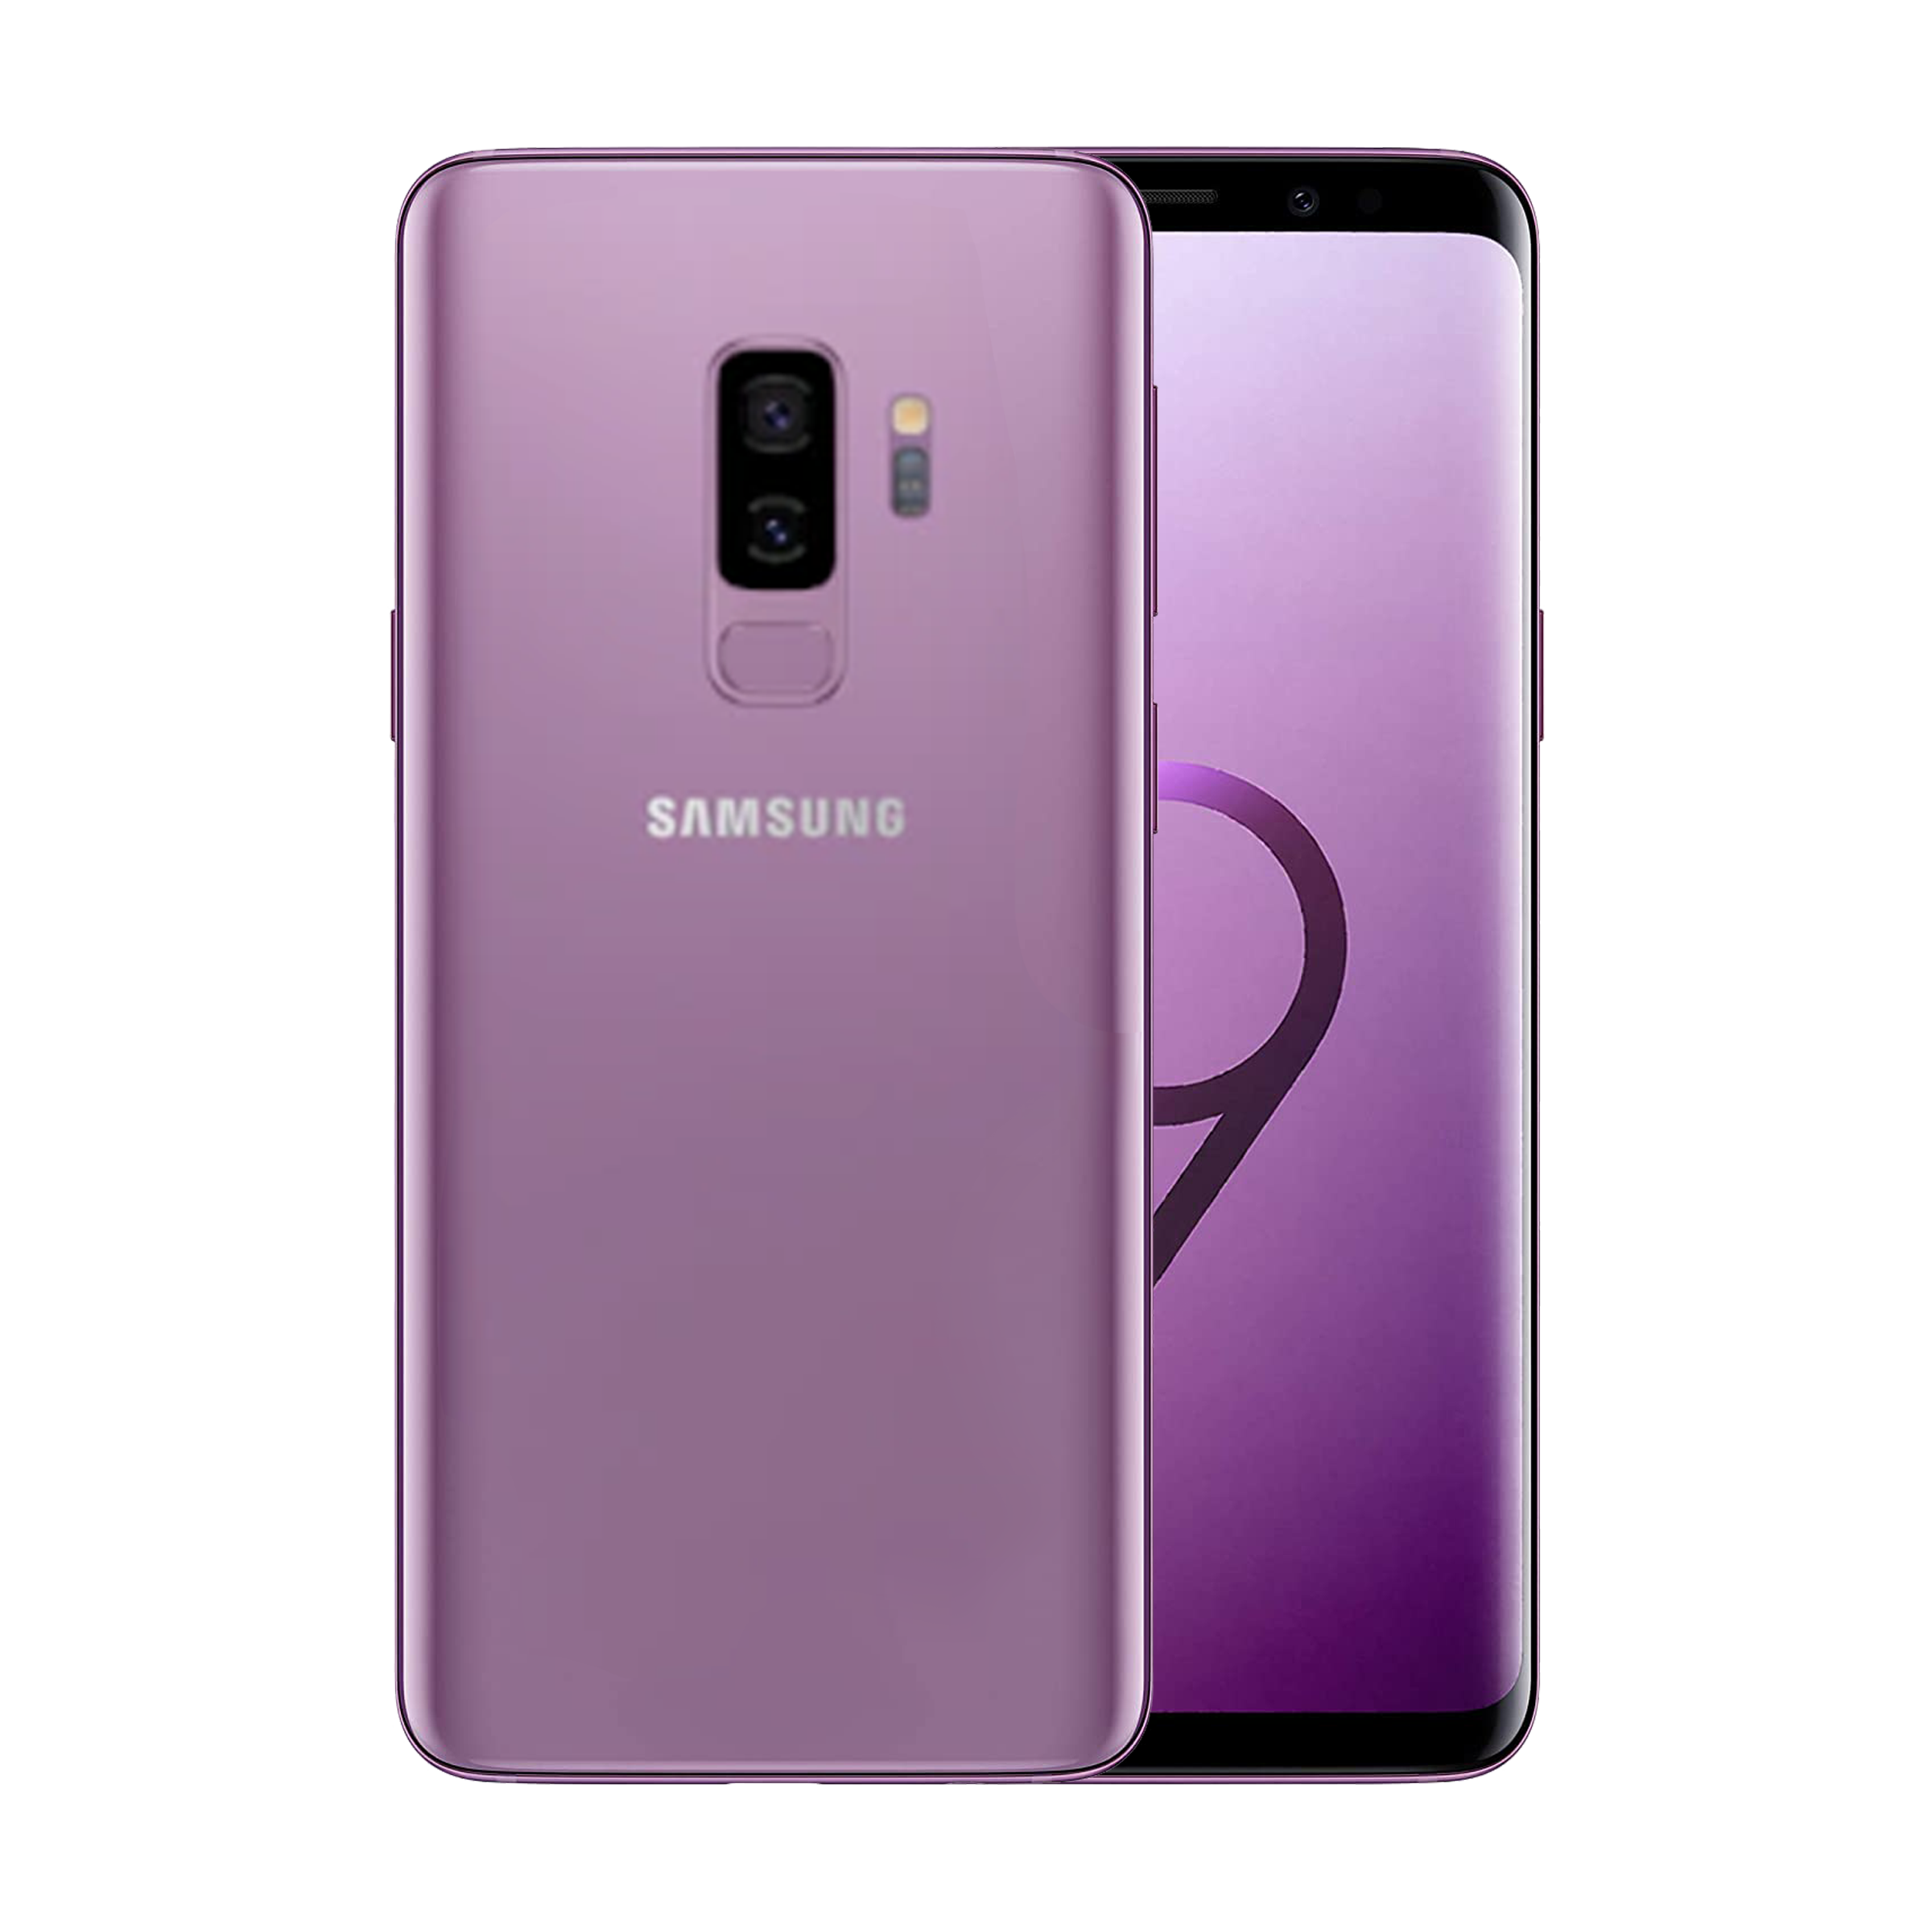 Samsung Galaxy S9 Plus 64GB Purple Very good - Unlocked